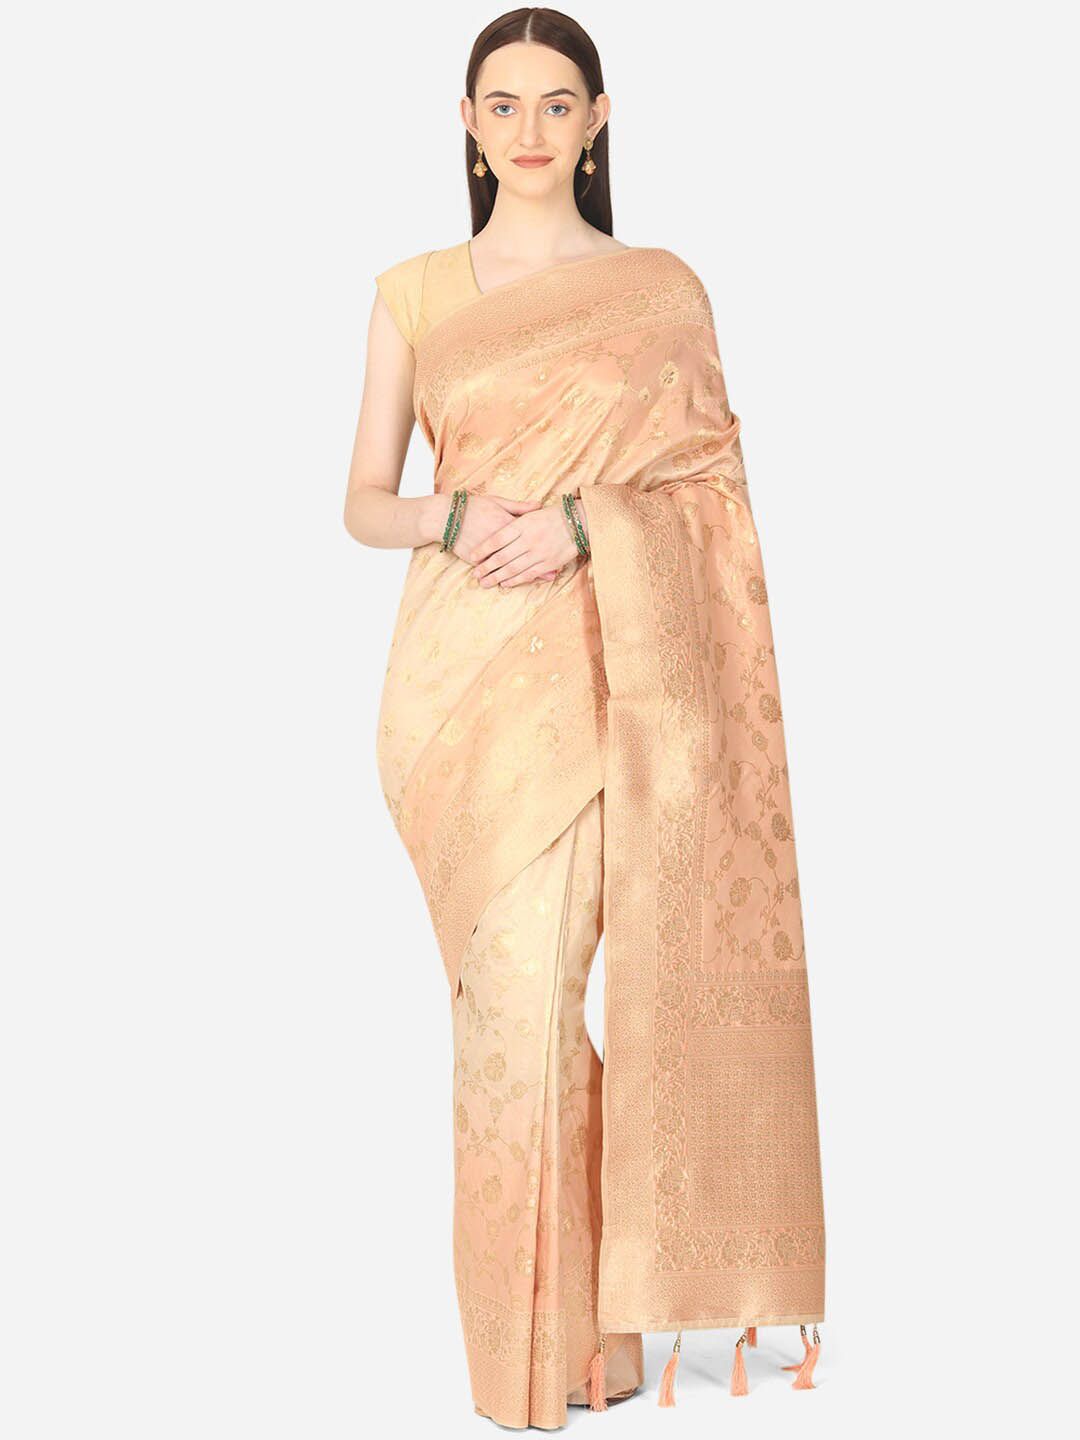 BOMBAY SELECTIONS Peach-Coloured & Gold-Toned Woven Design Art Silk Banarasi Saree Price in India